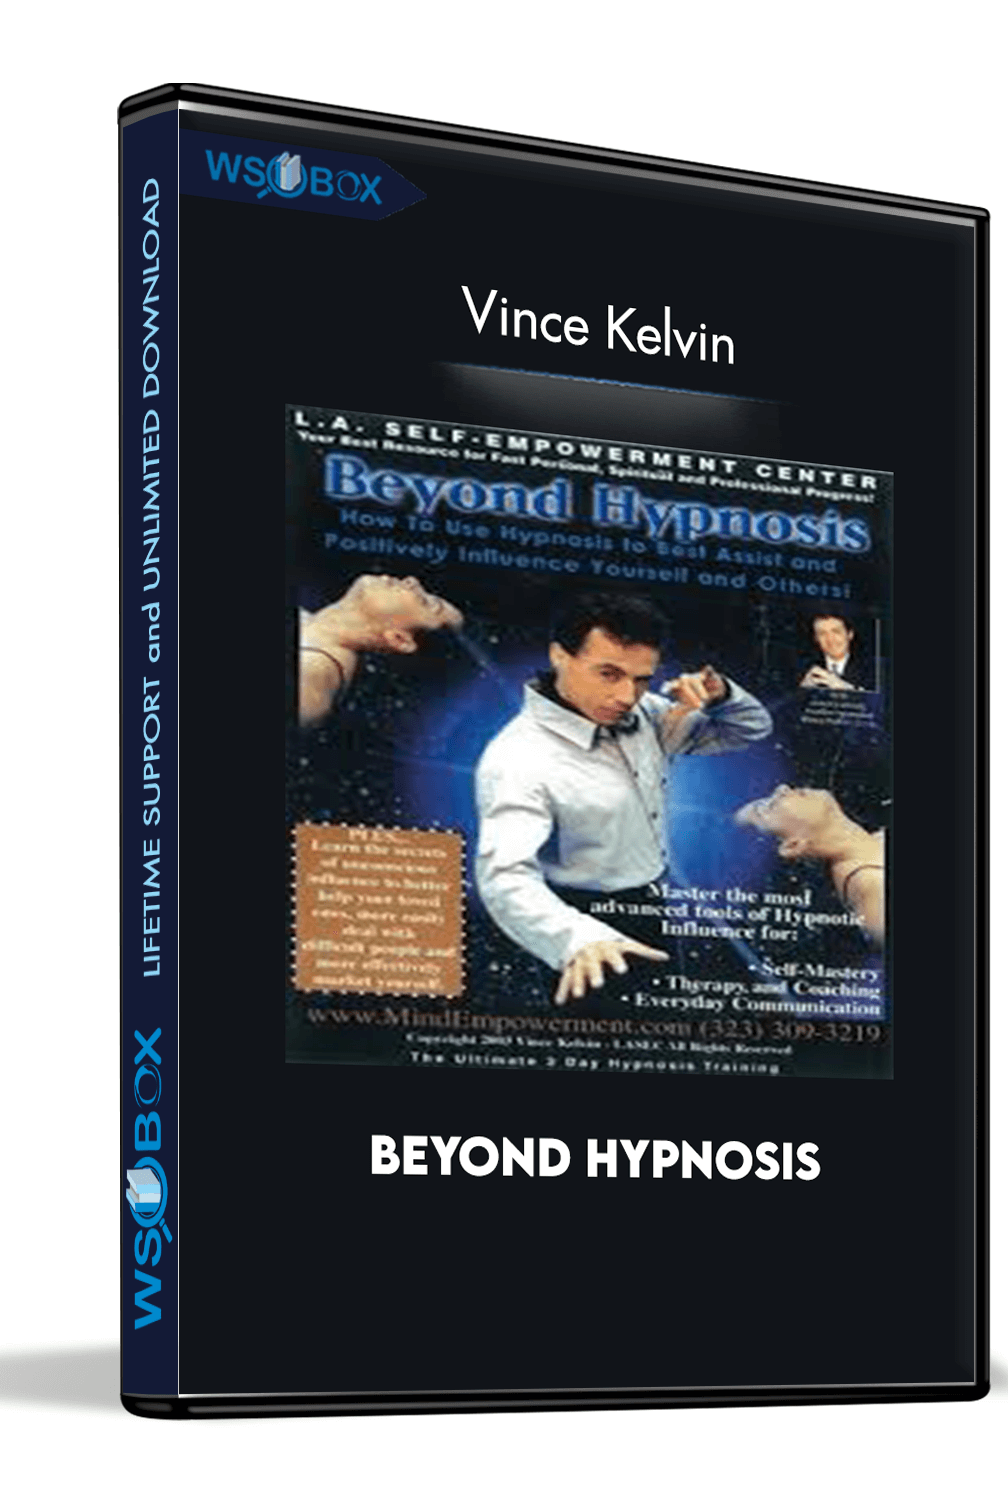 beyond-hypnosis-vince-kelvin